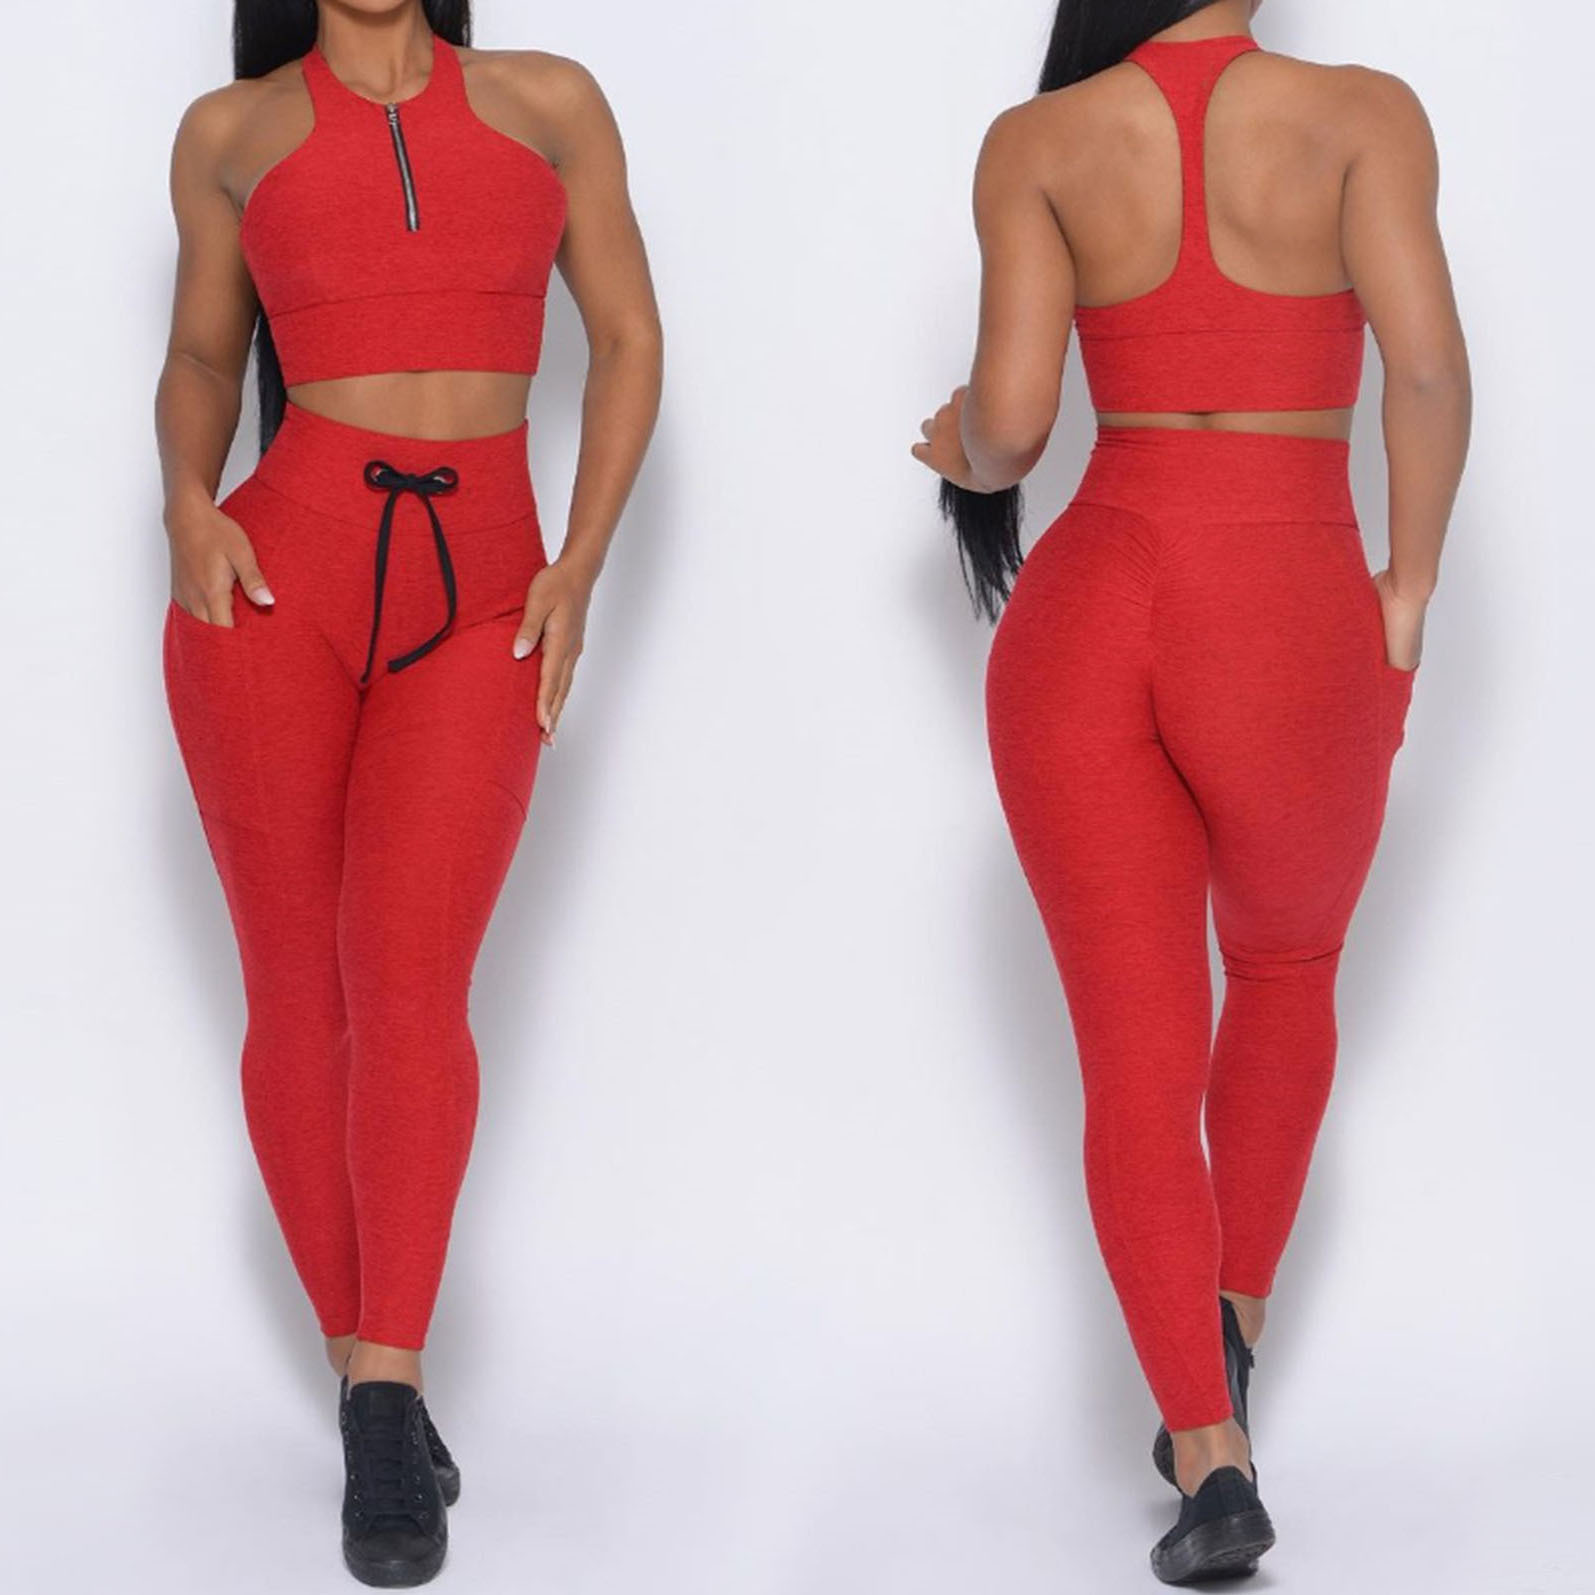 New women’s suit half zipper sports bra tops high waist drawstring pants fitness suit Featured Image